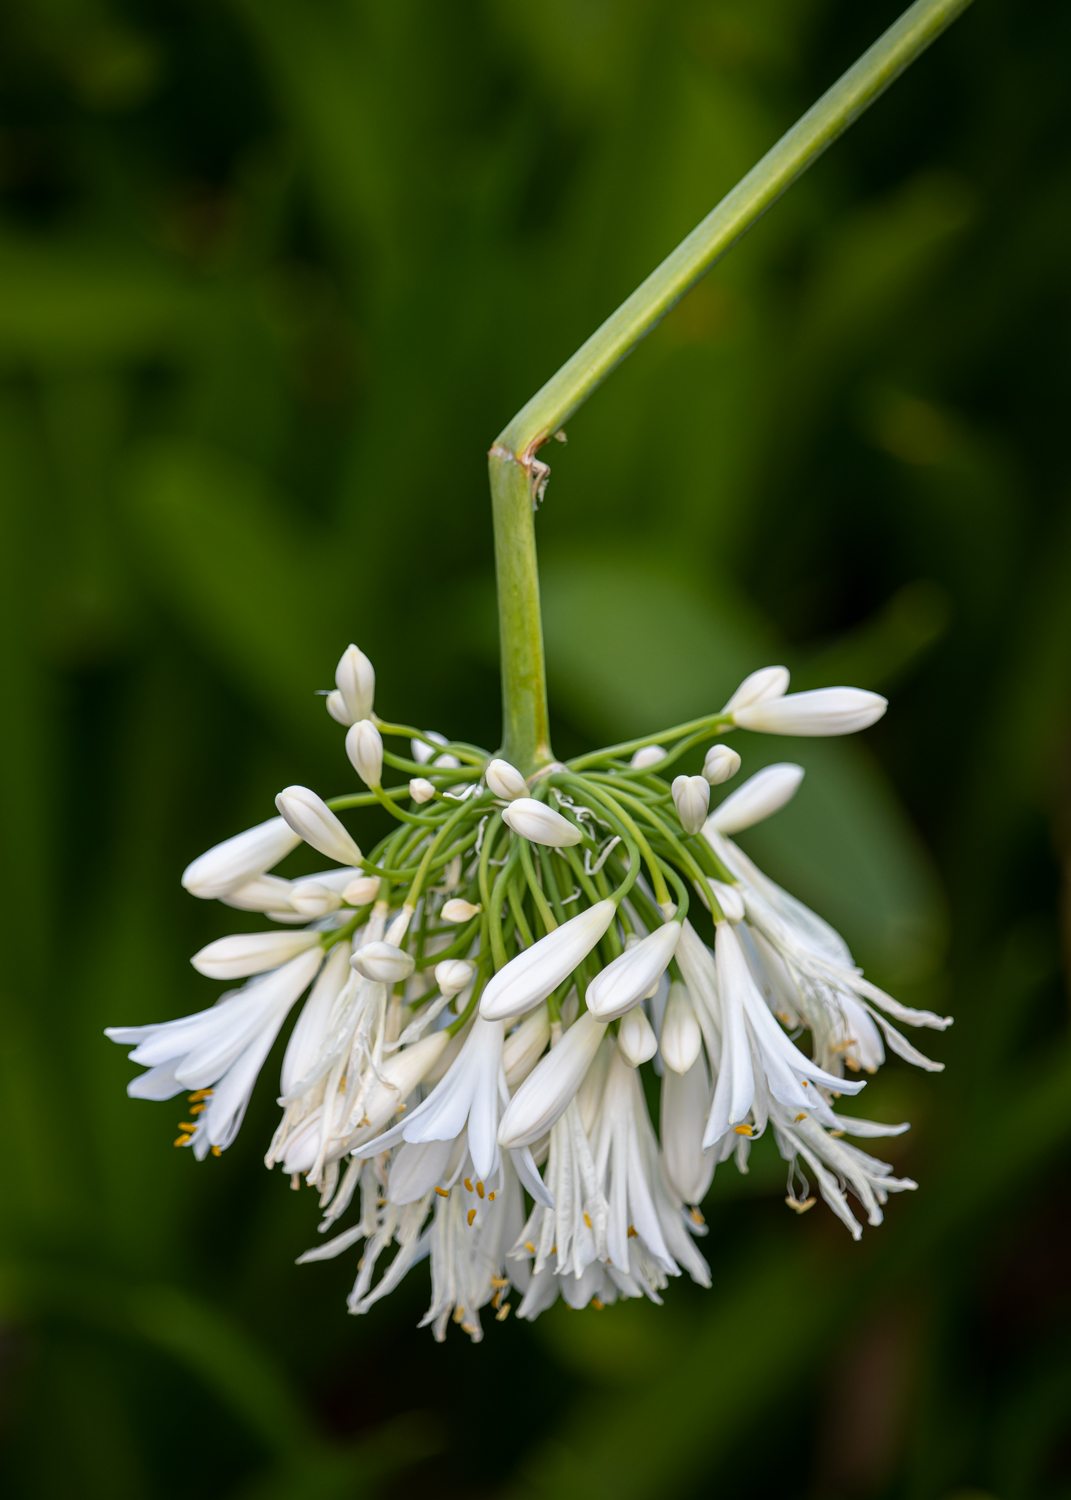 A white agapanthus flower hanging off a broken stem